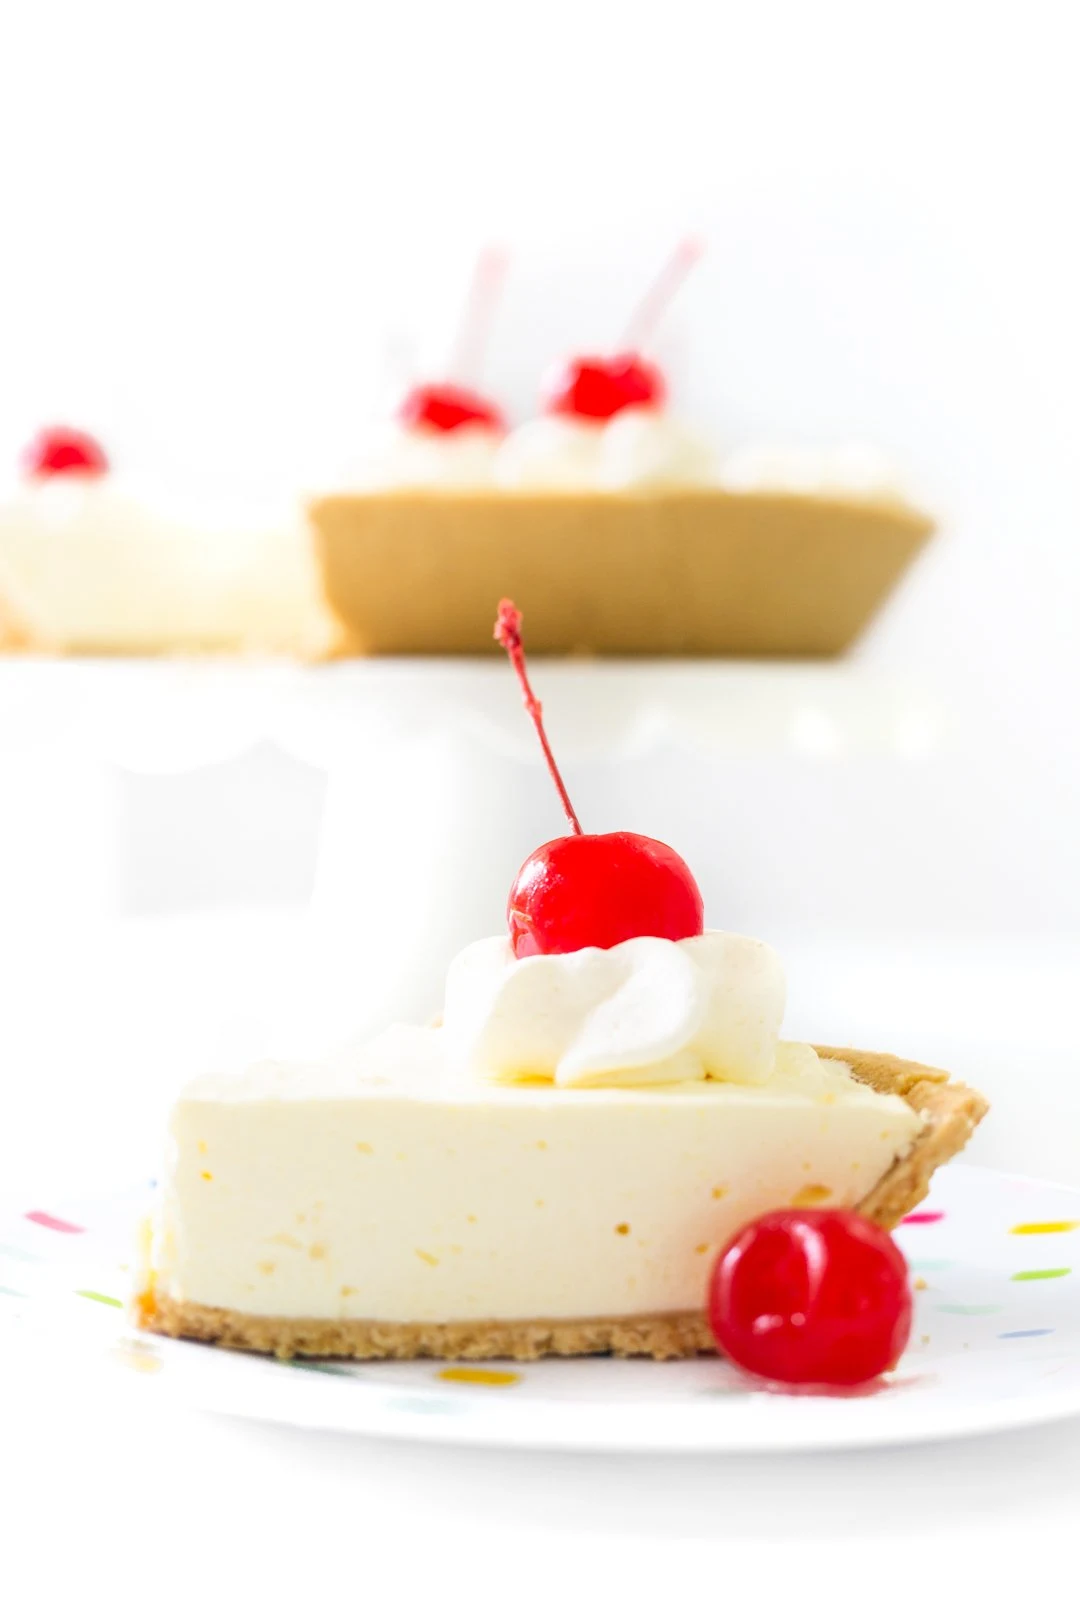 Easy Jello Pie Slice with whipped cream and cherries